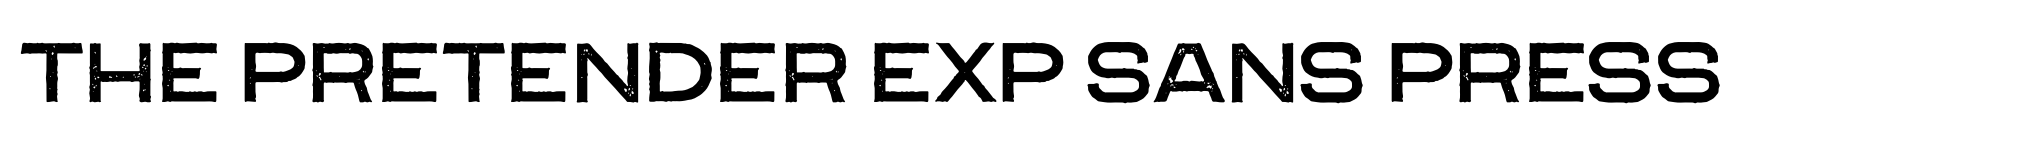 The Pretender Exp Sans Press image